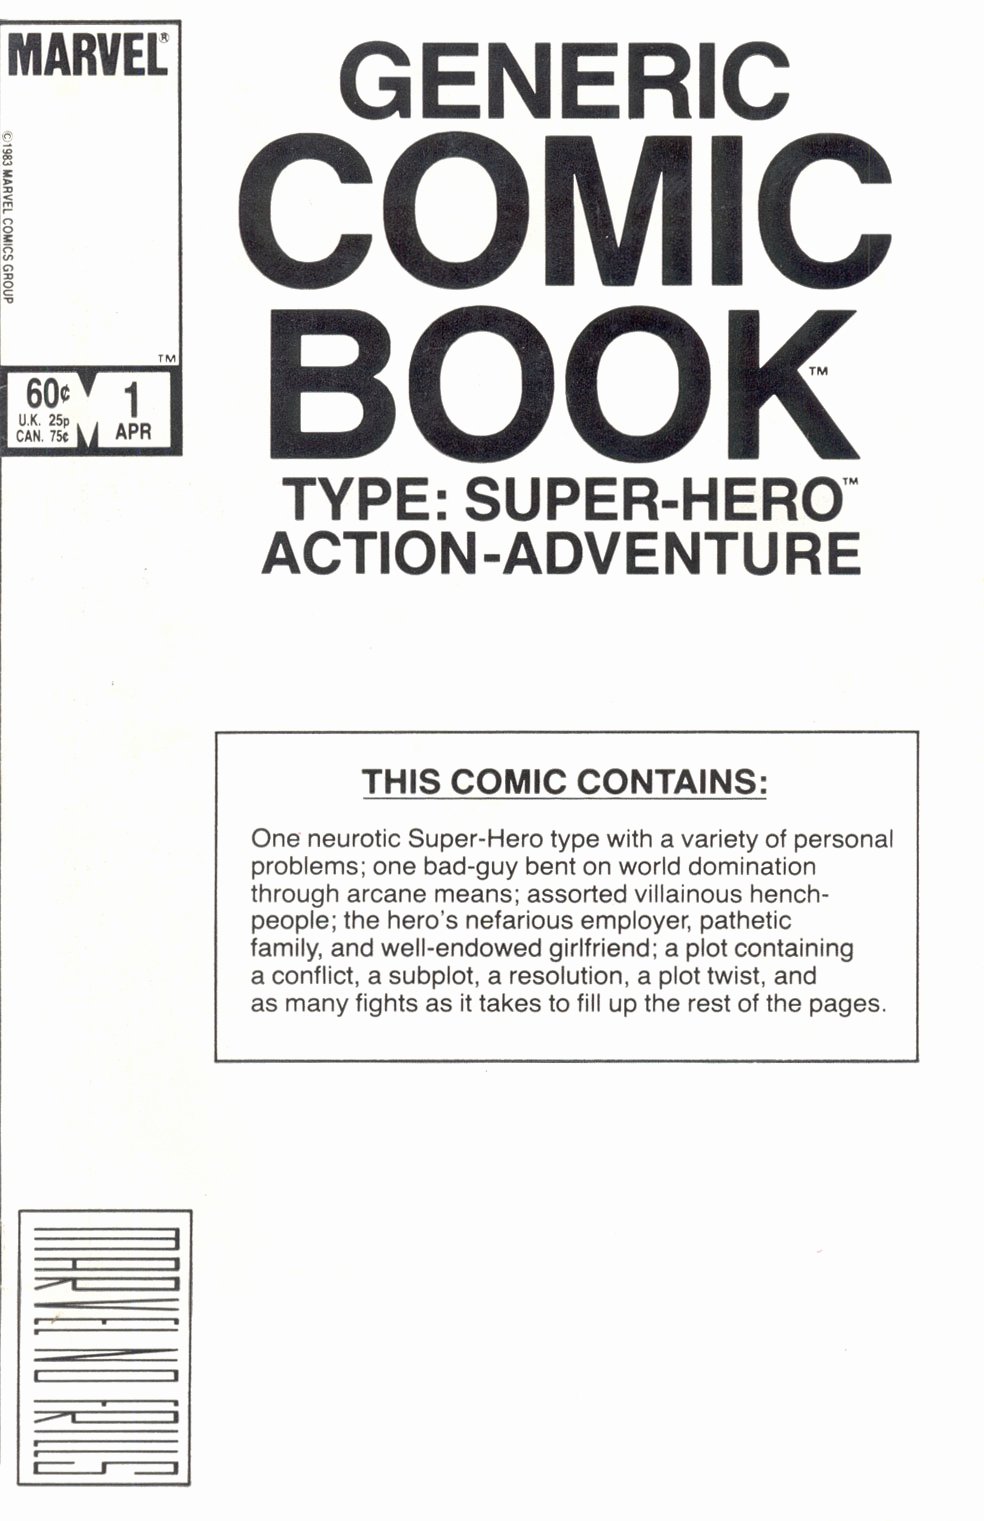 Comic Book Cover Template Unique the Saturday Ics Generic Ic Book